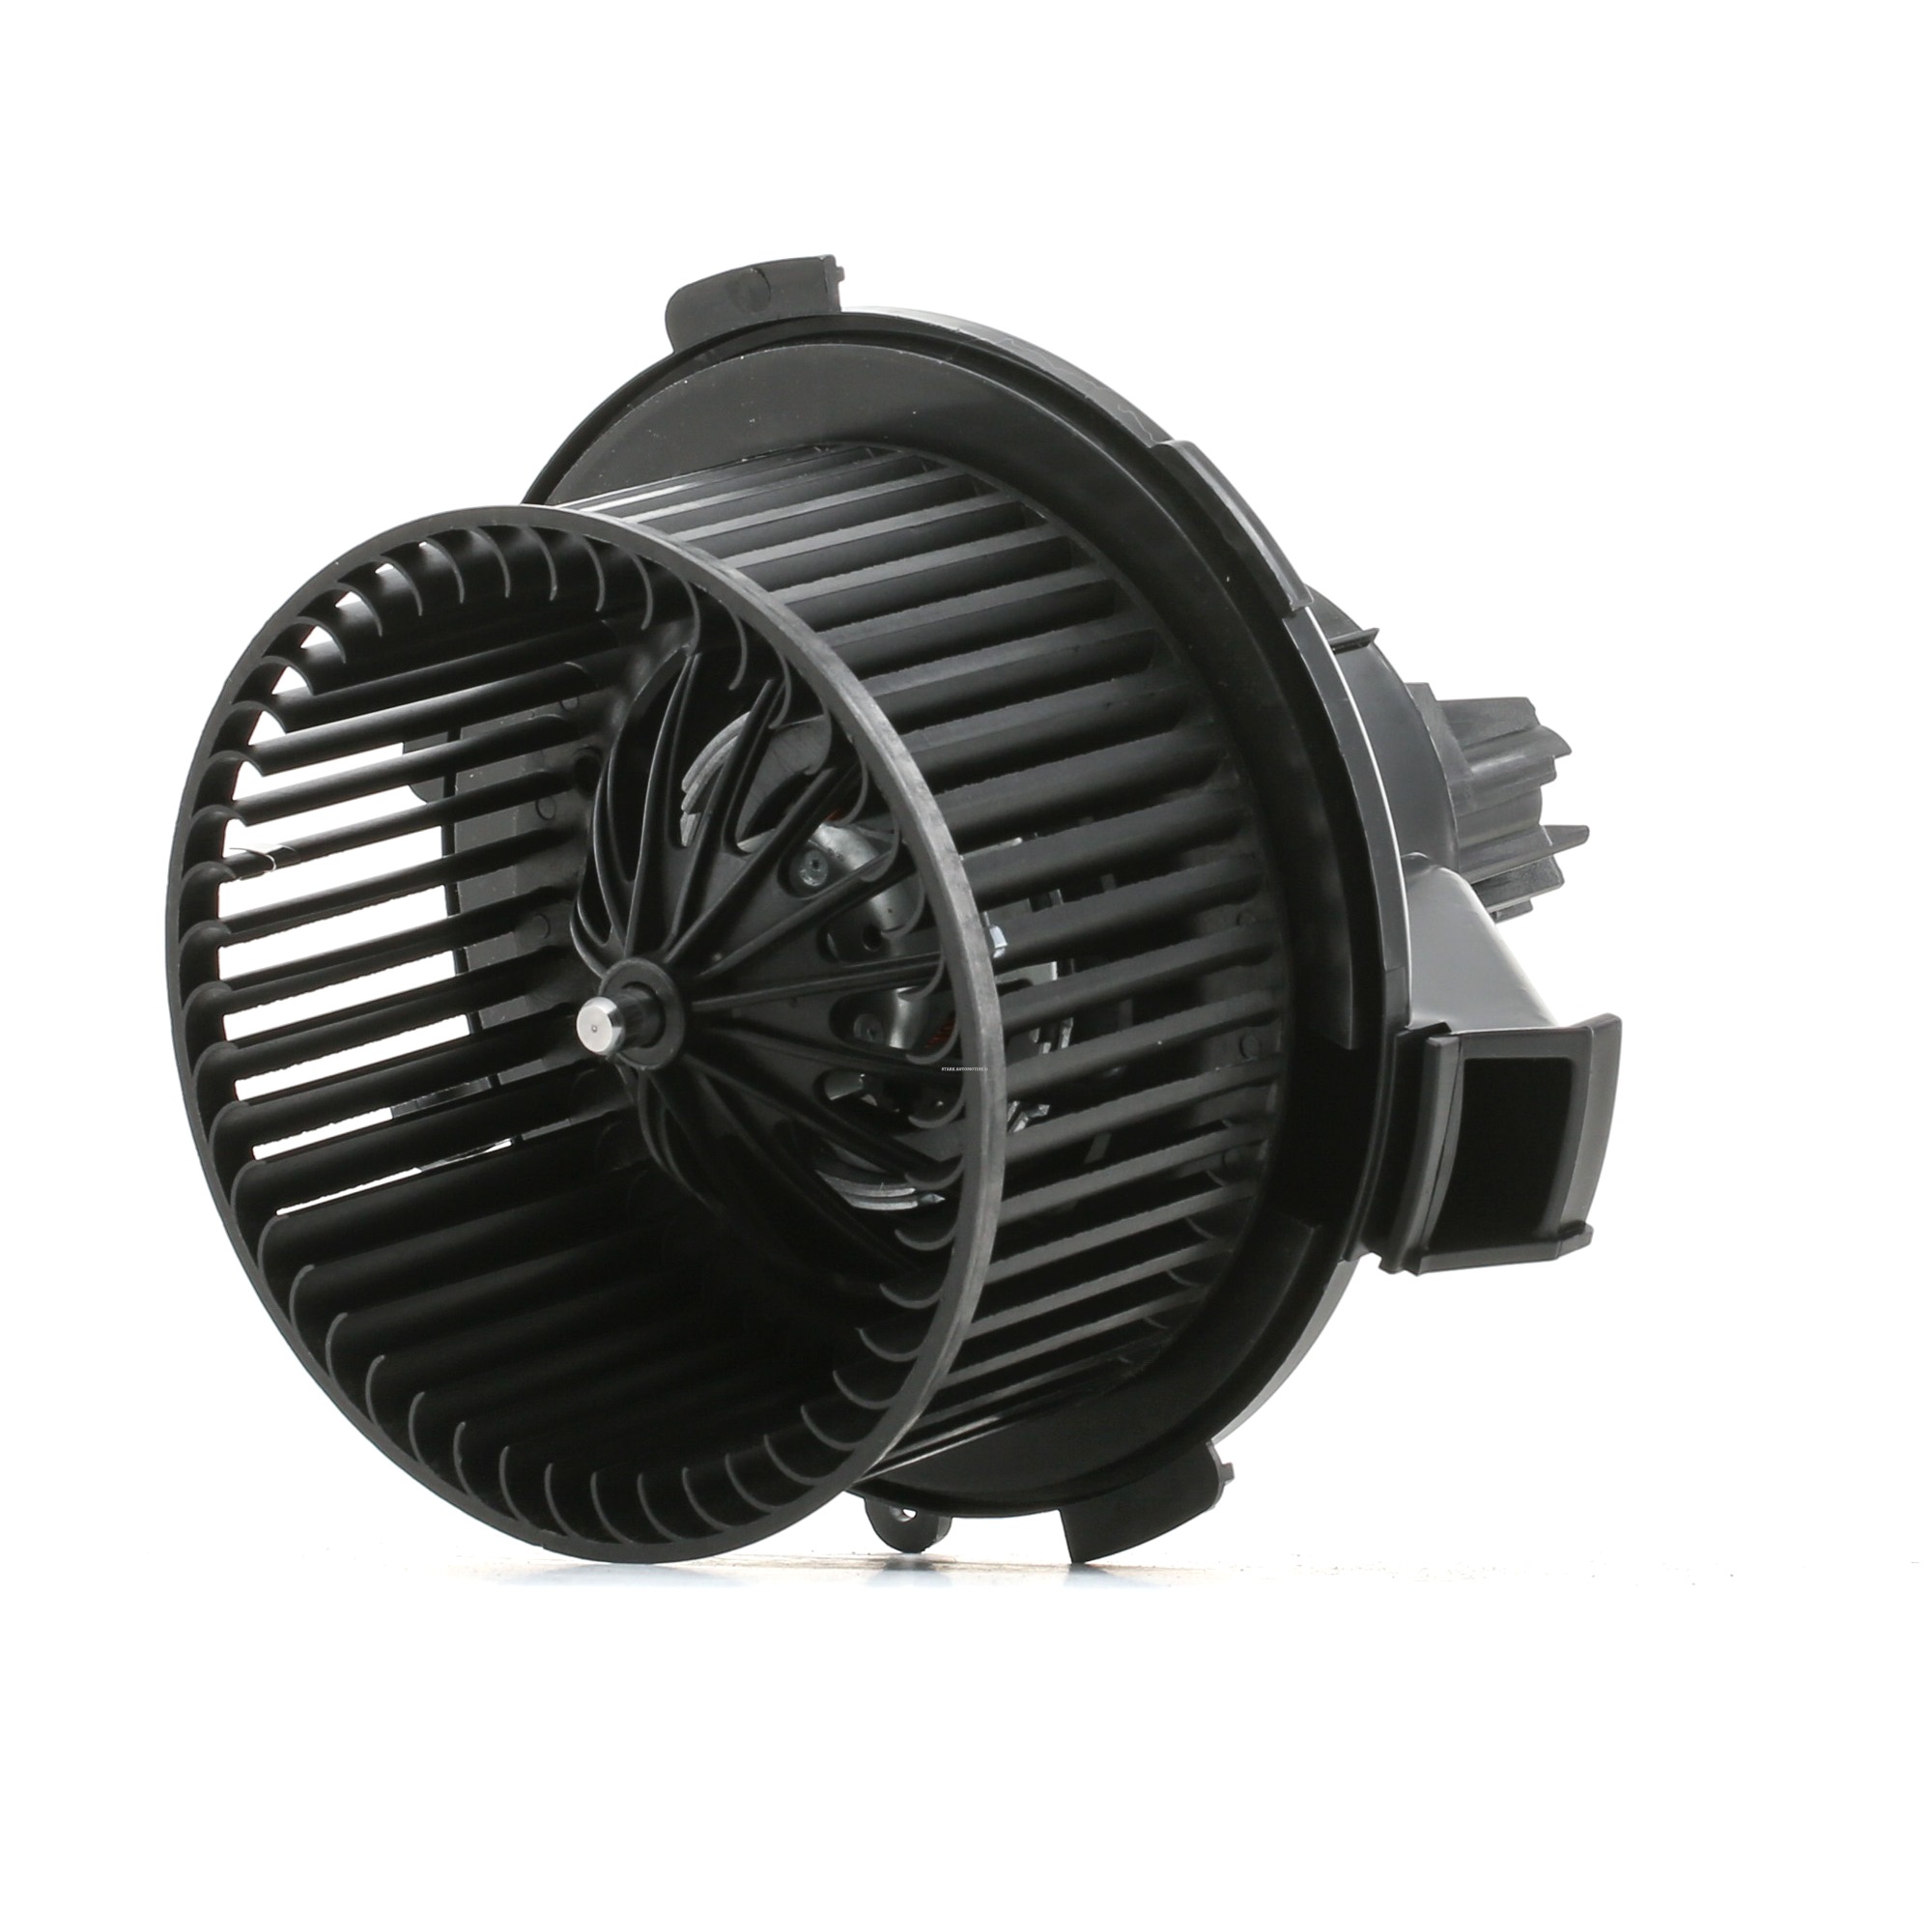 SKIB-0310078 STARK Heater blower motor OPEL for left-hand drive vehicles, without radiator fan shroud